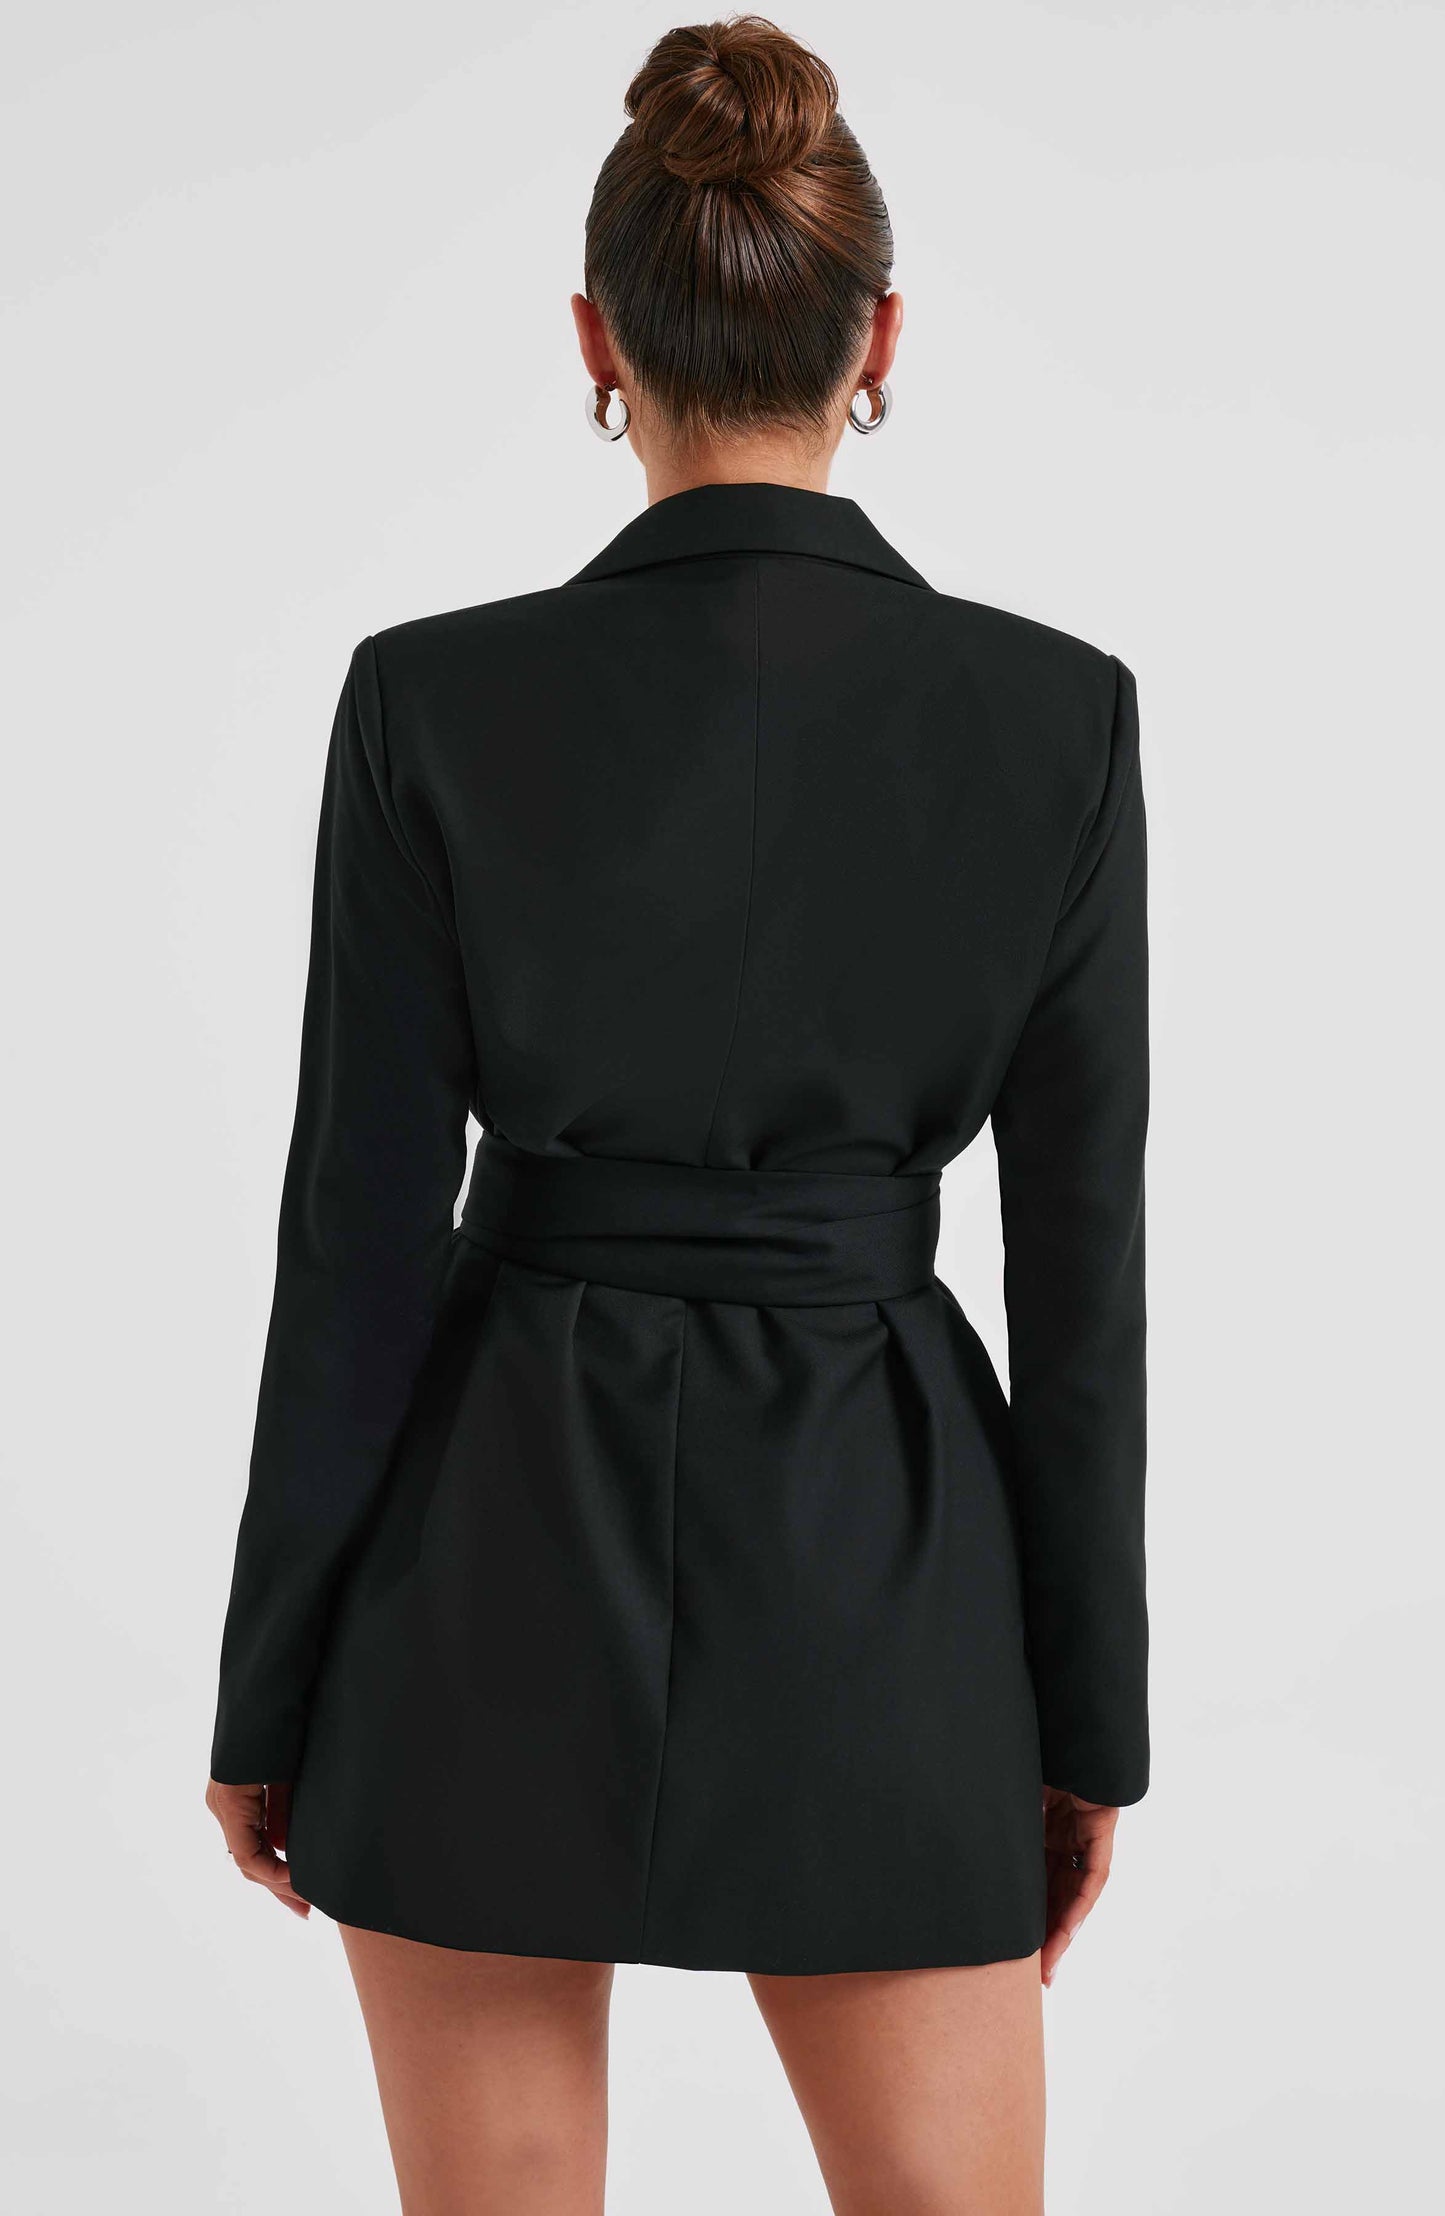 Heather Suit Dress - Black